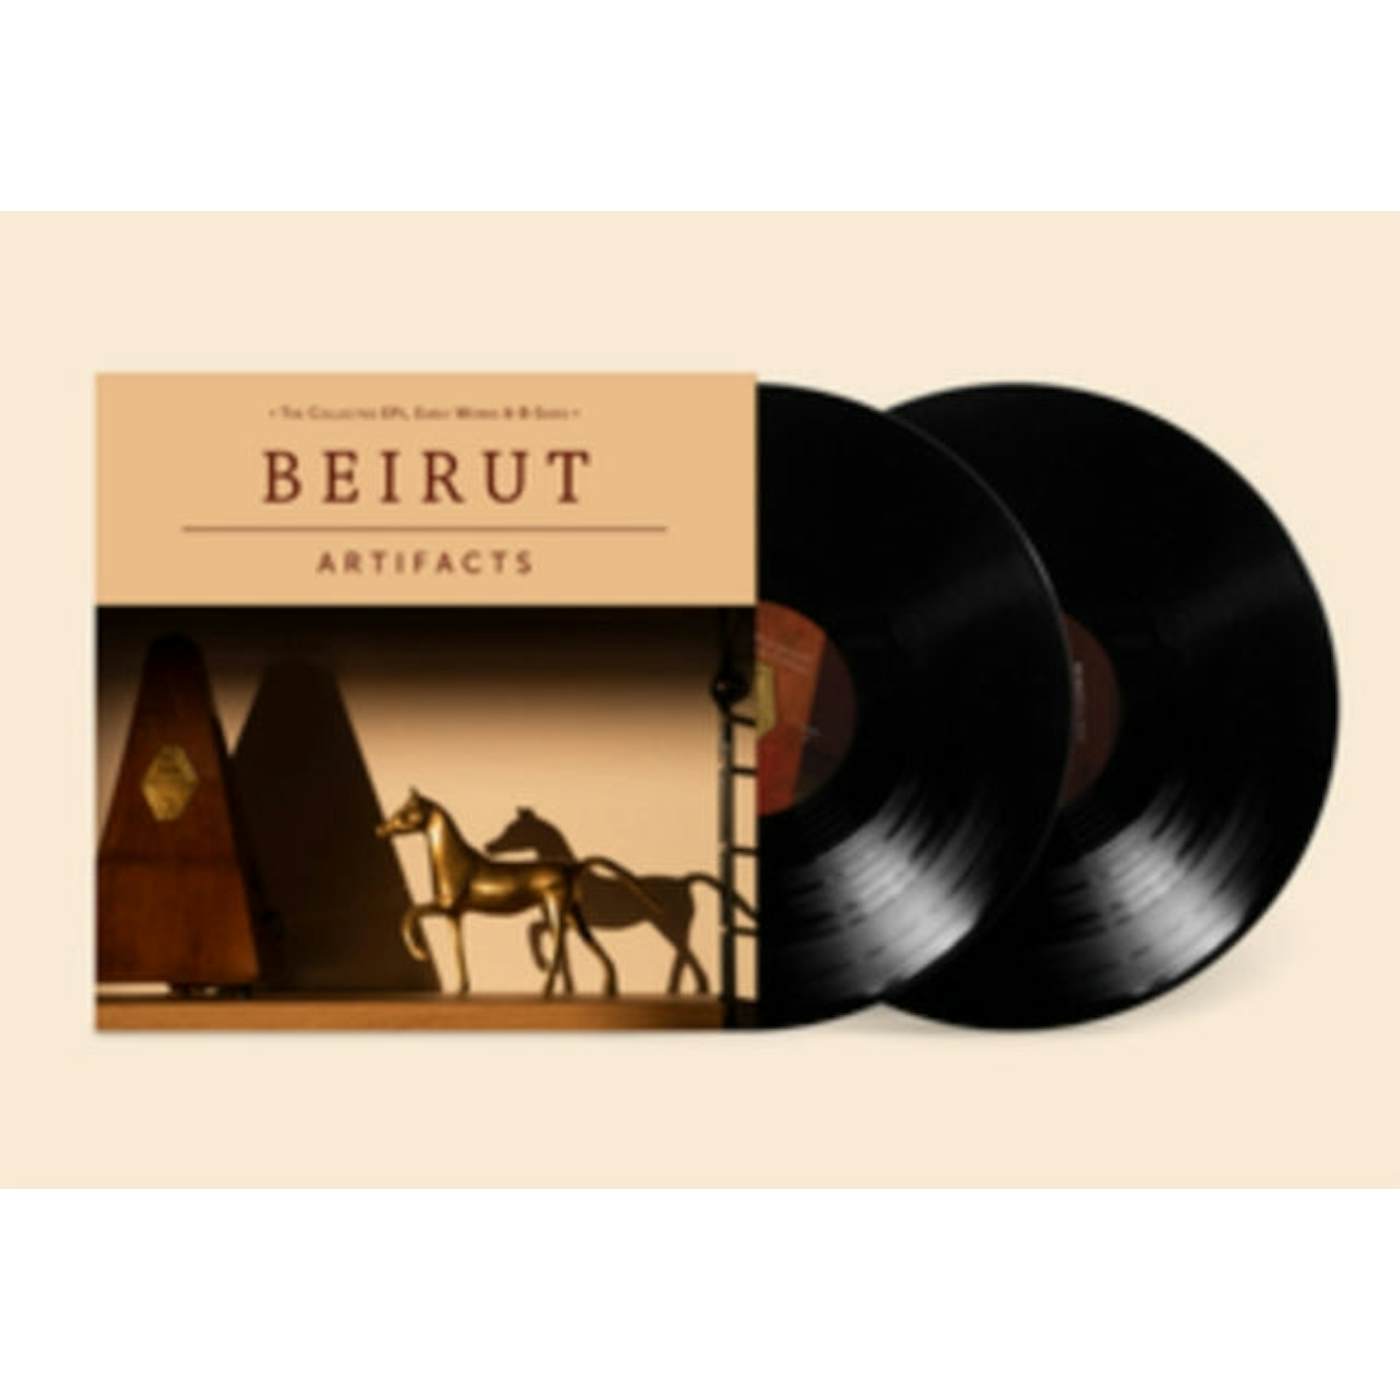 Beirut LP Vinyl Record - Artifacts